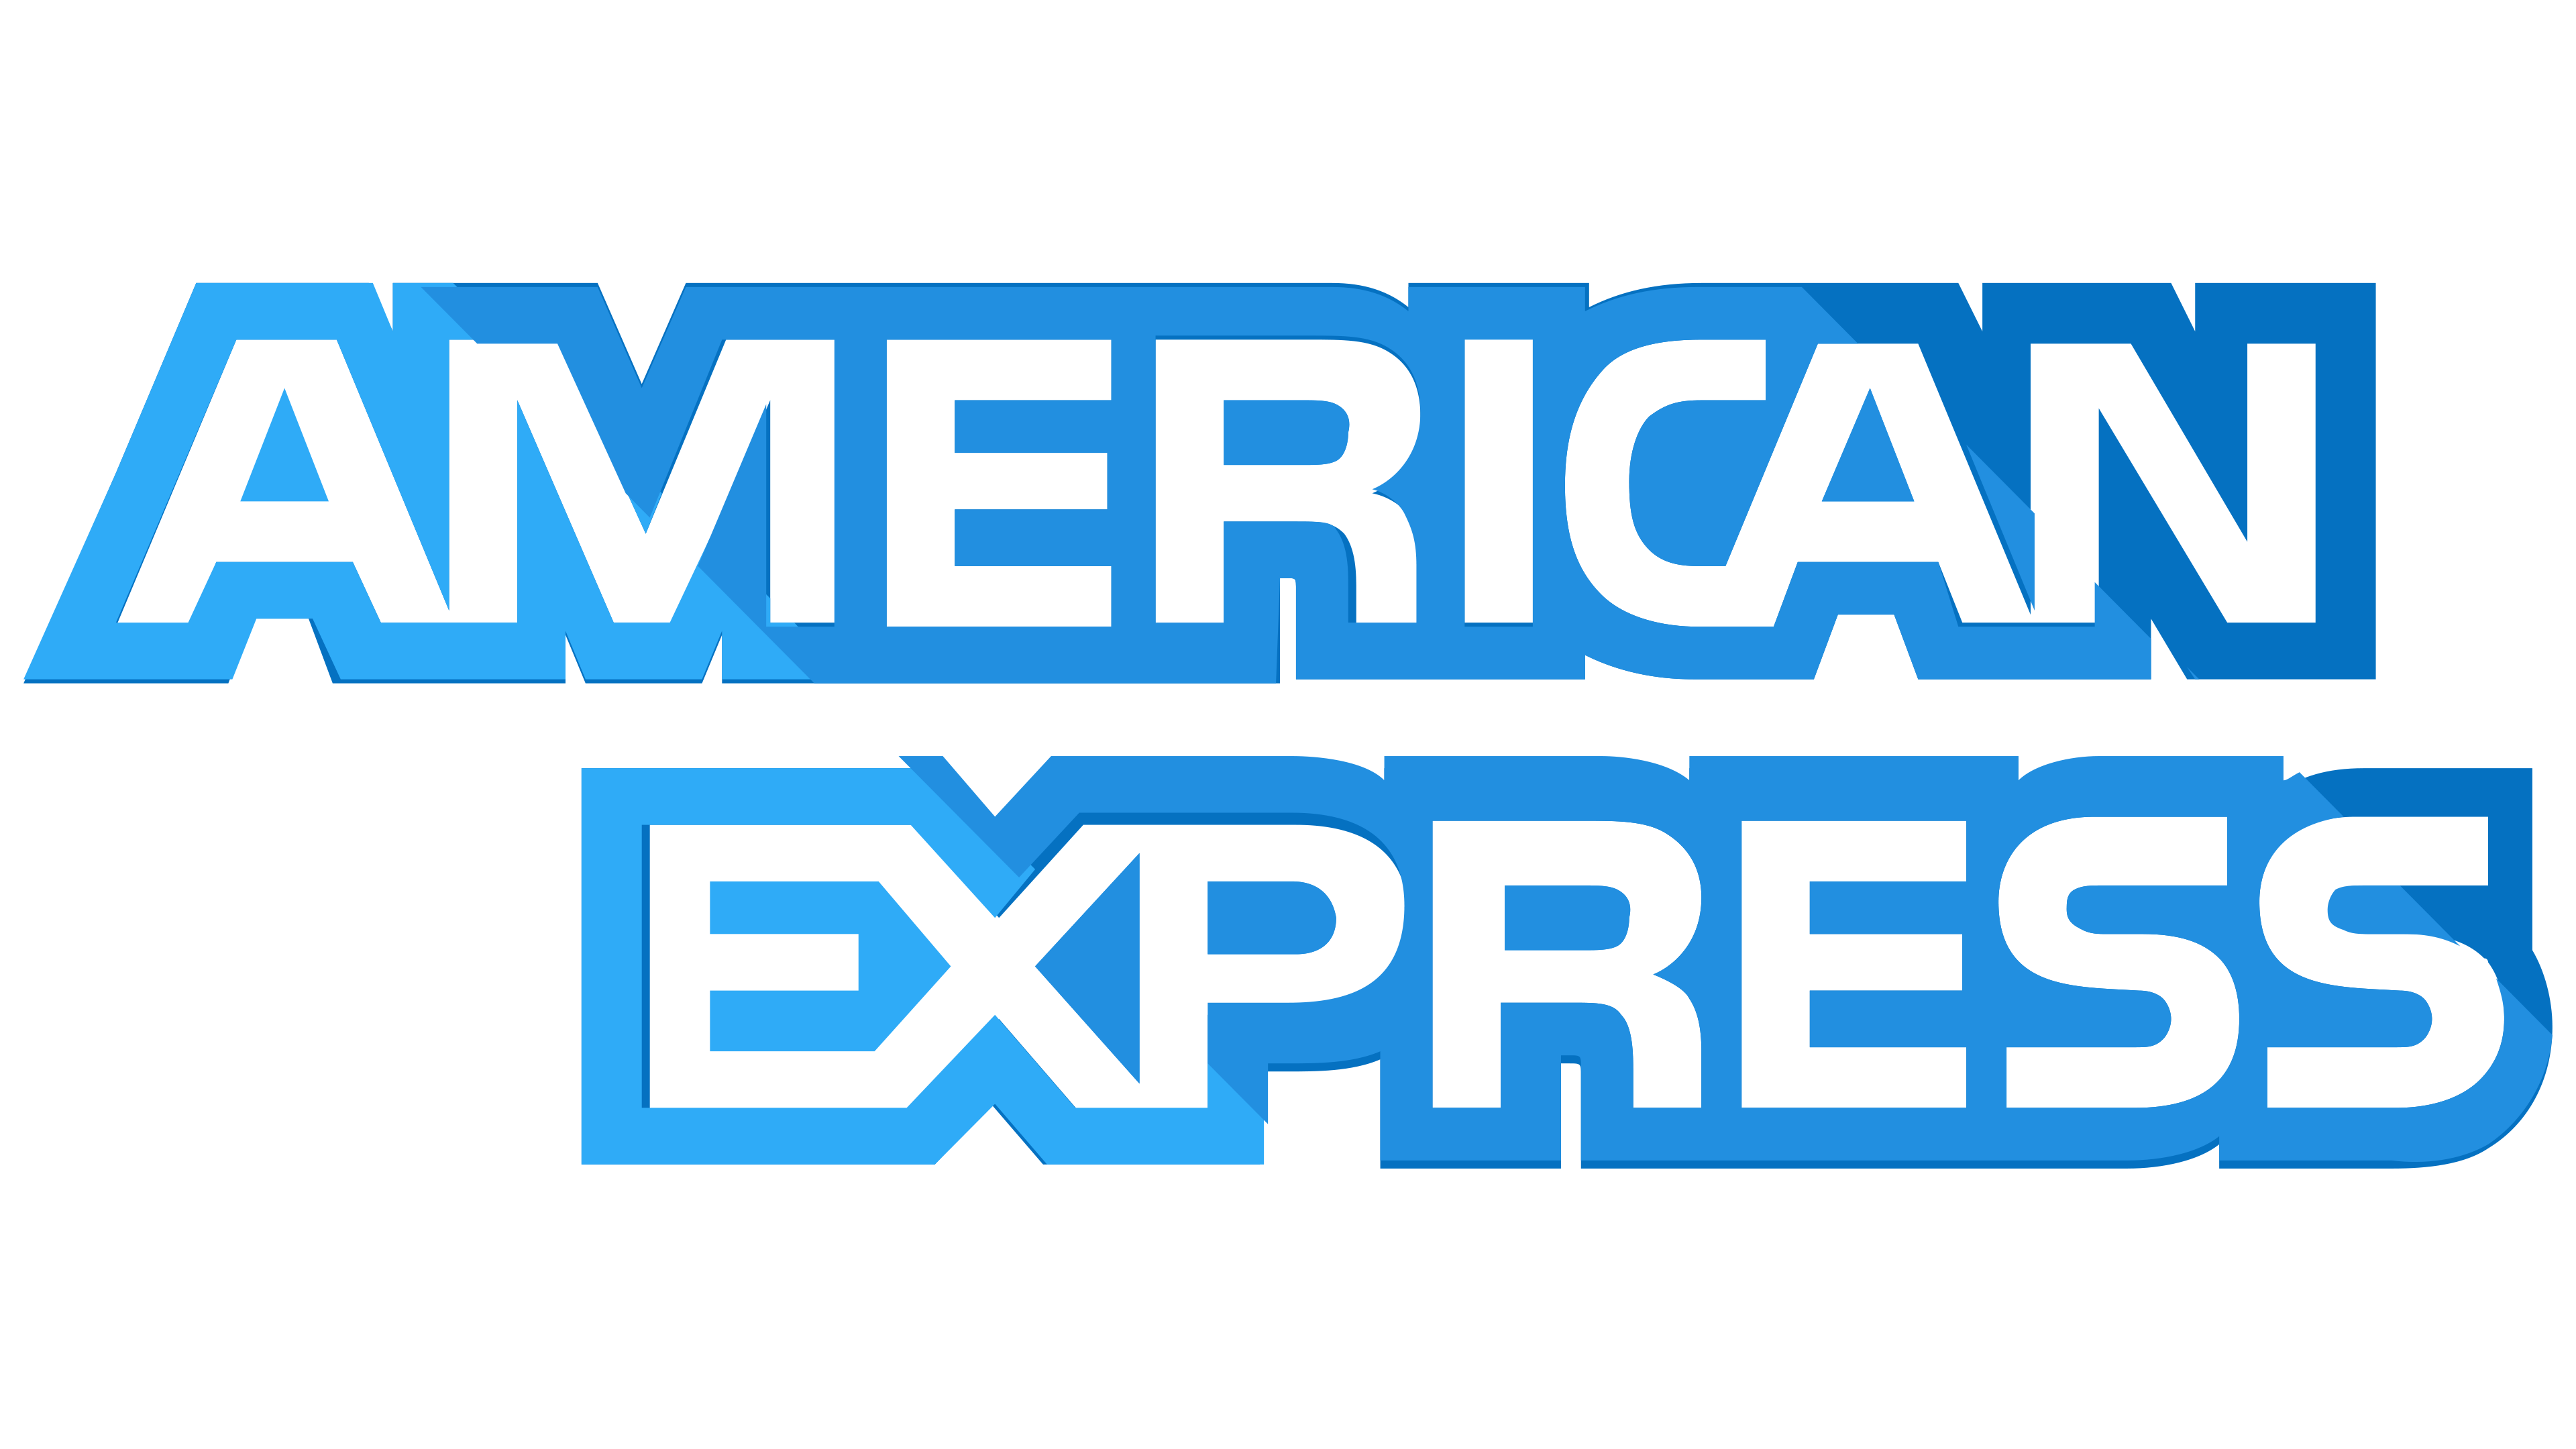 T me brand american express. American Express. American Express logo. Amex платежная система. Платежная система Американ экспресс.